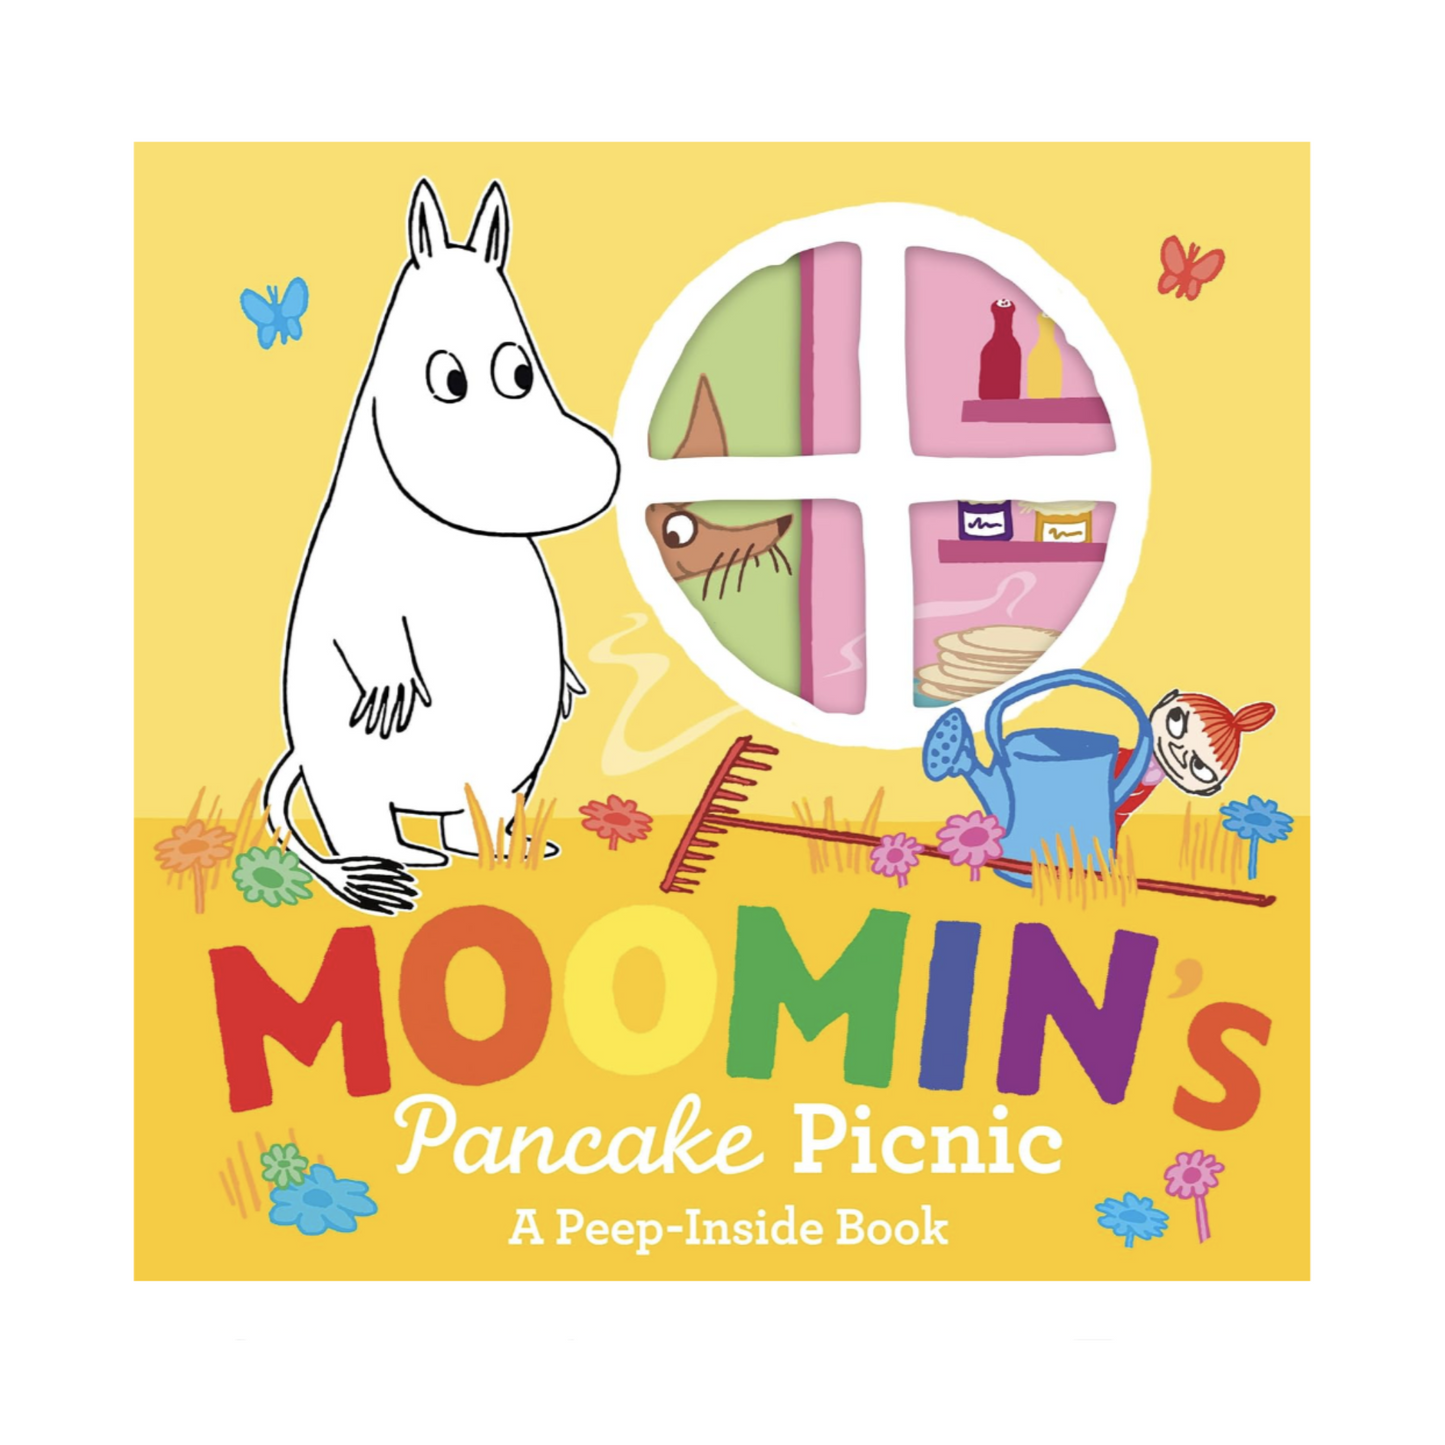 Moomin's Pancake Picnic A Peep-Inside Book (8918291644703)